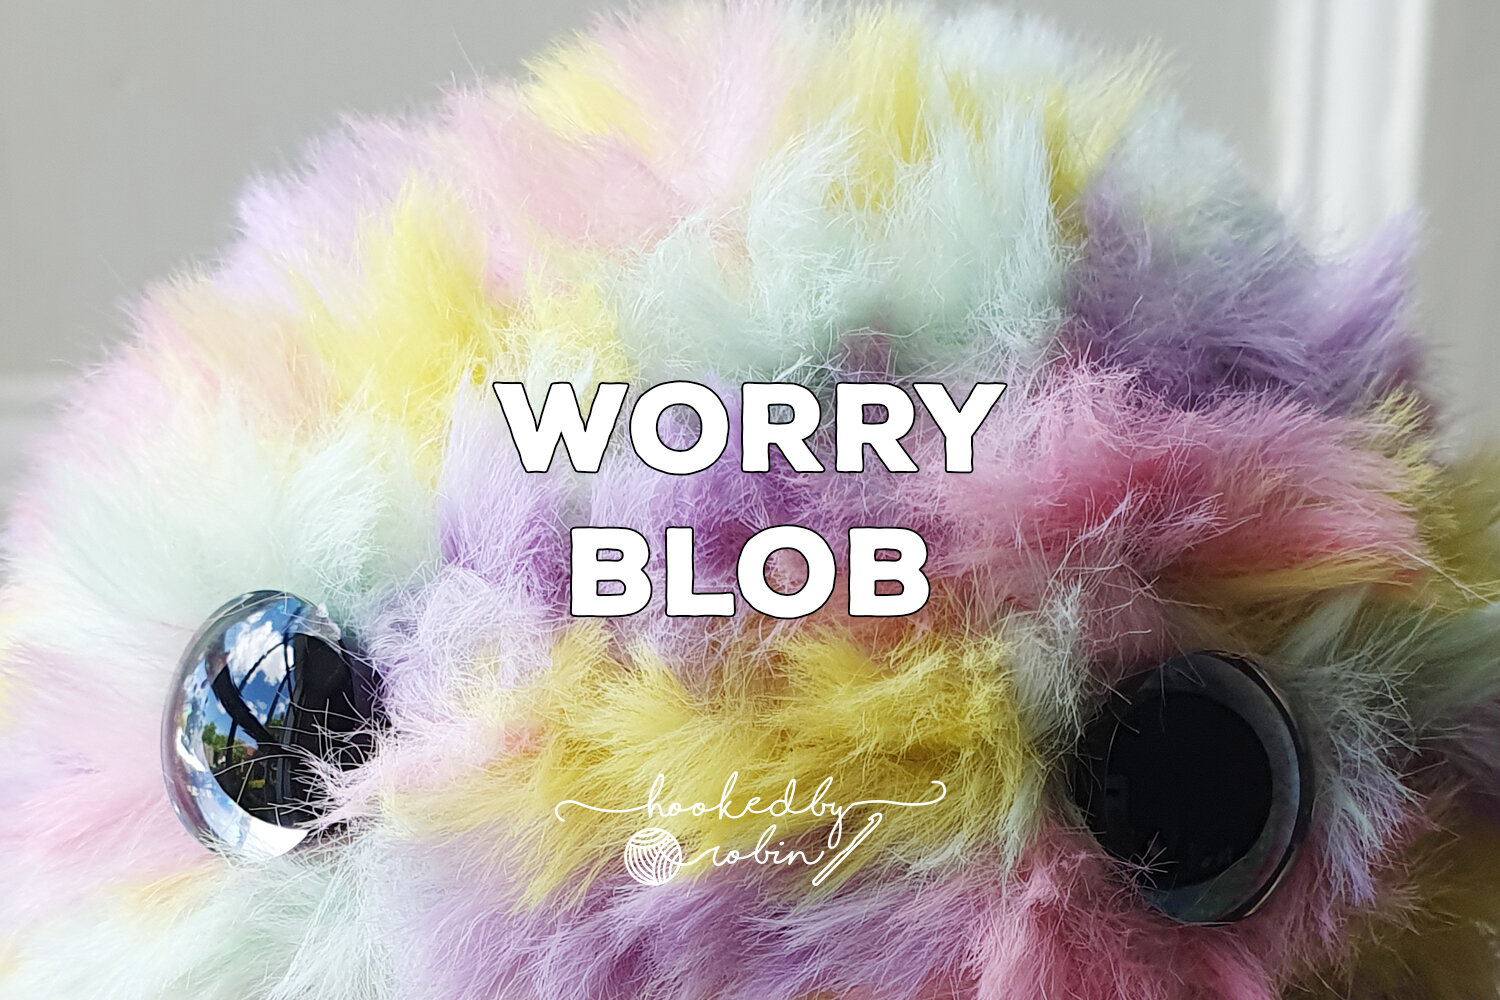 Stress Ball Plushies Soft and Fluffy Crochet Amigurumi anxiety